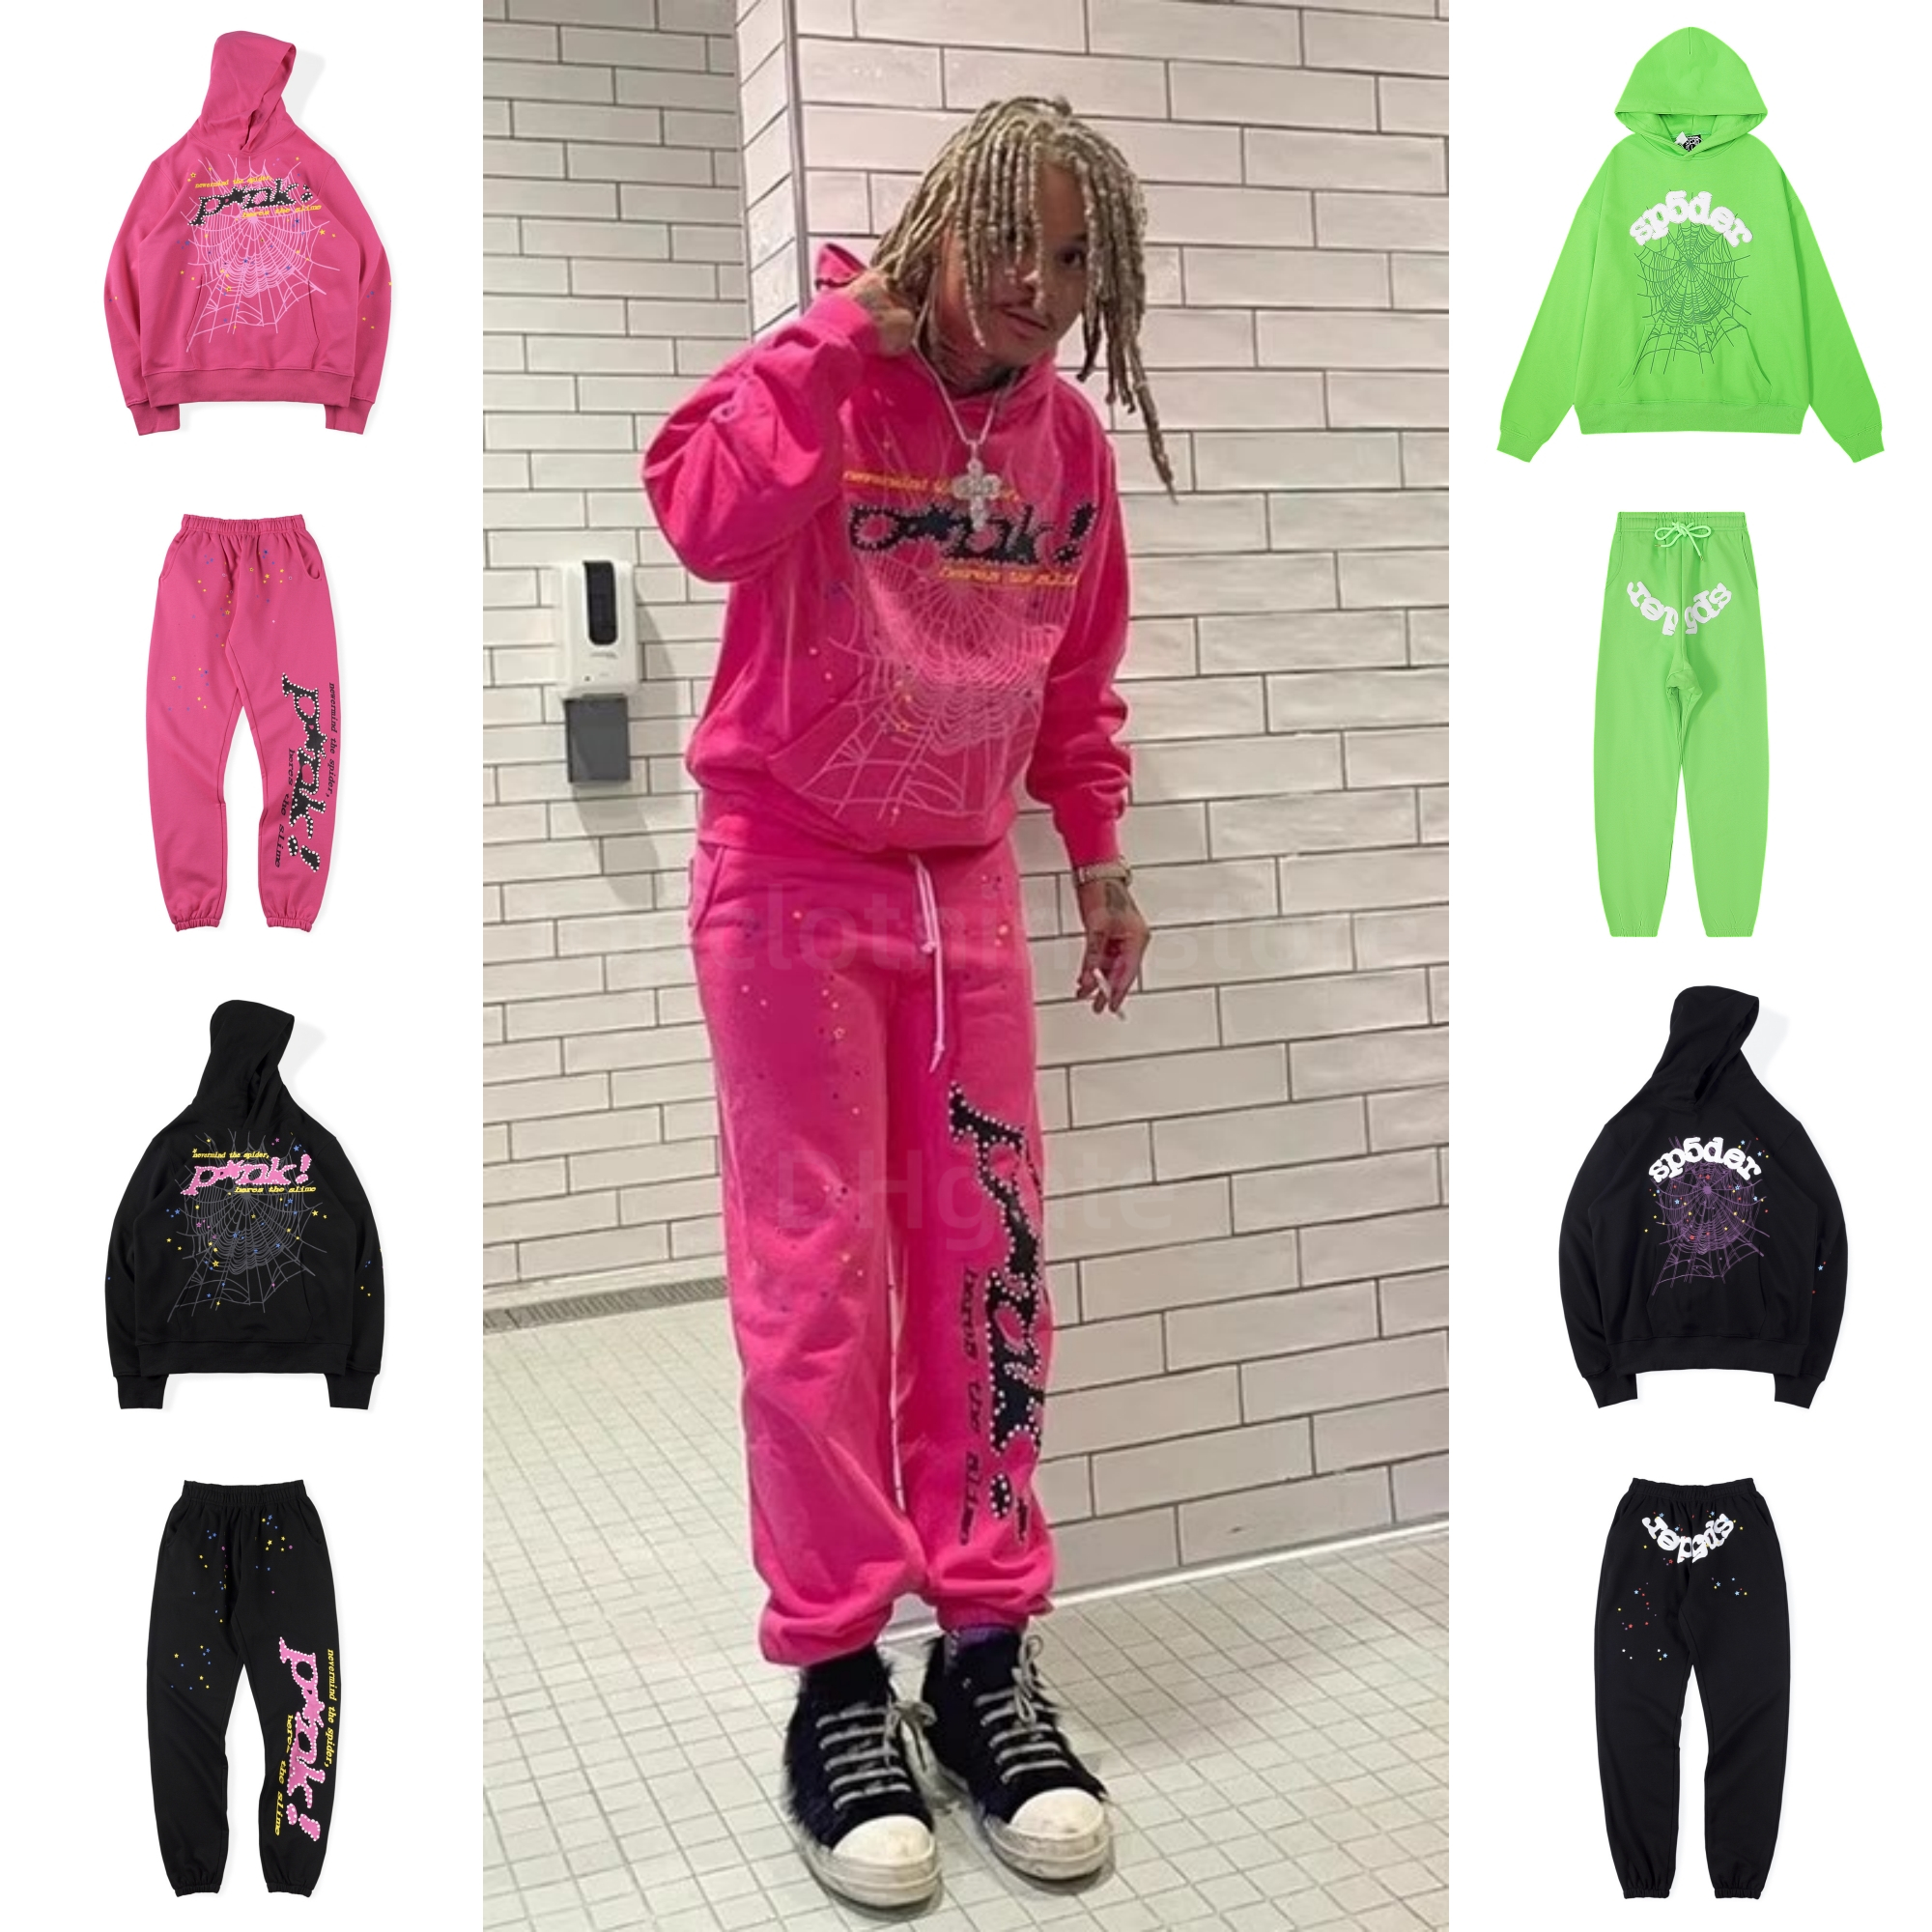 Designer Spider Pink Hoodie sp5der Hound Hoodies Sweatshirts Streetwear 5555555 Thug Angel Hoody Men Web Pullover Y2K Way S-XL